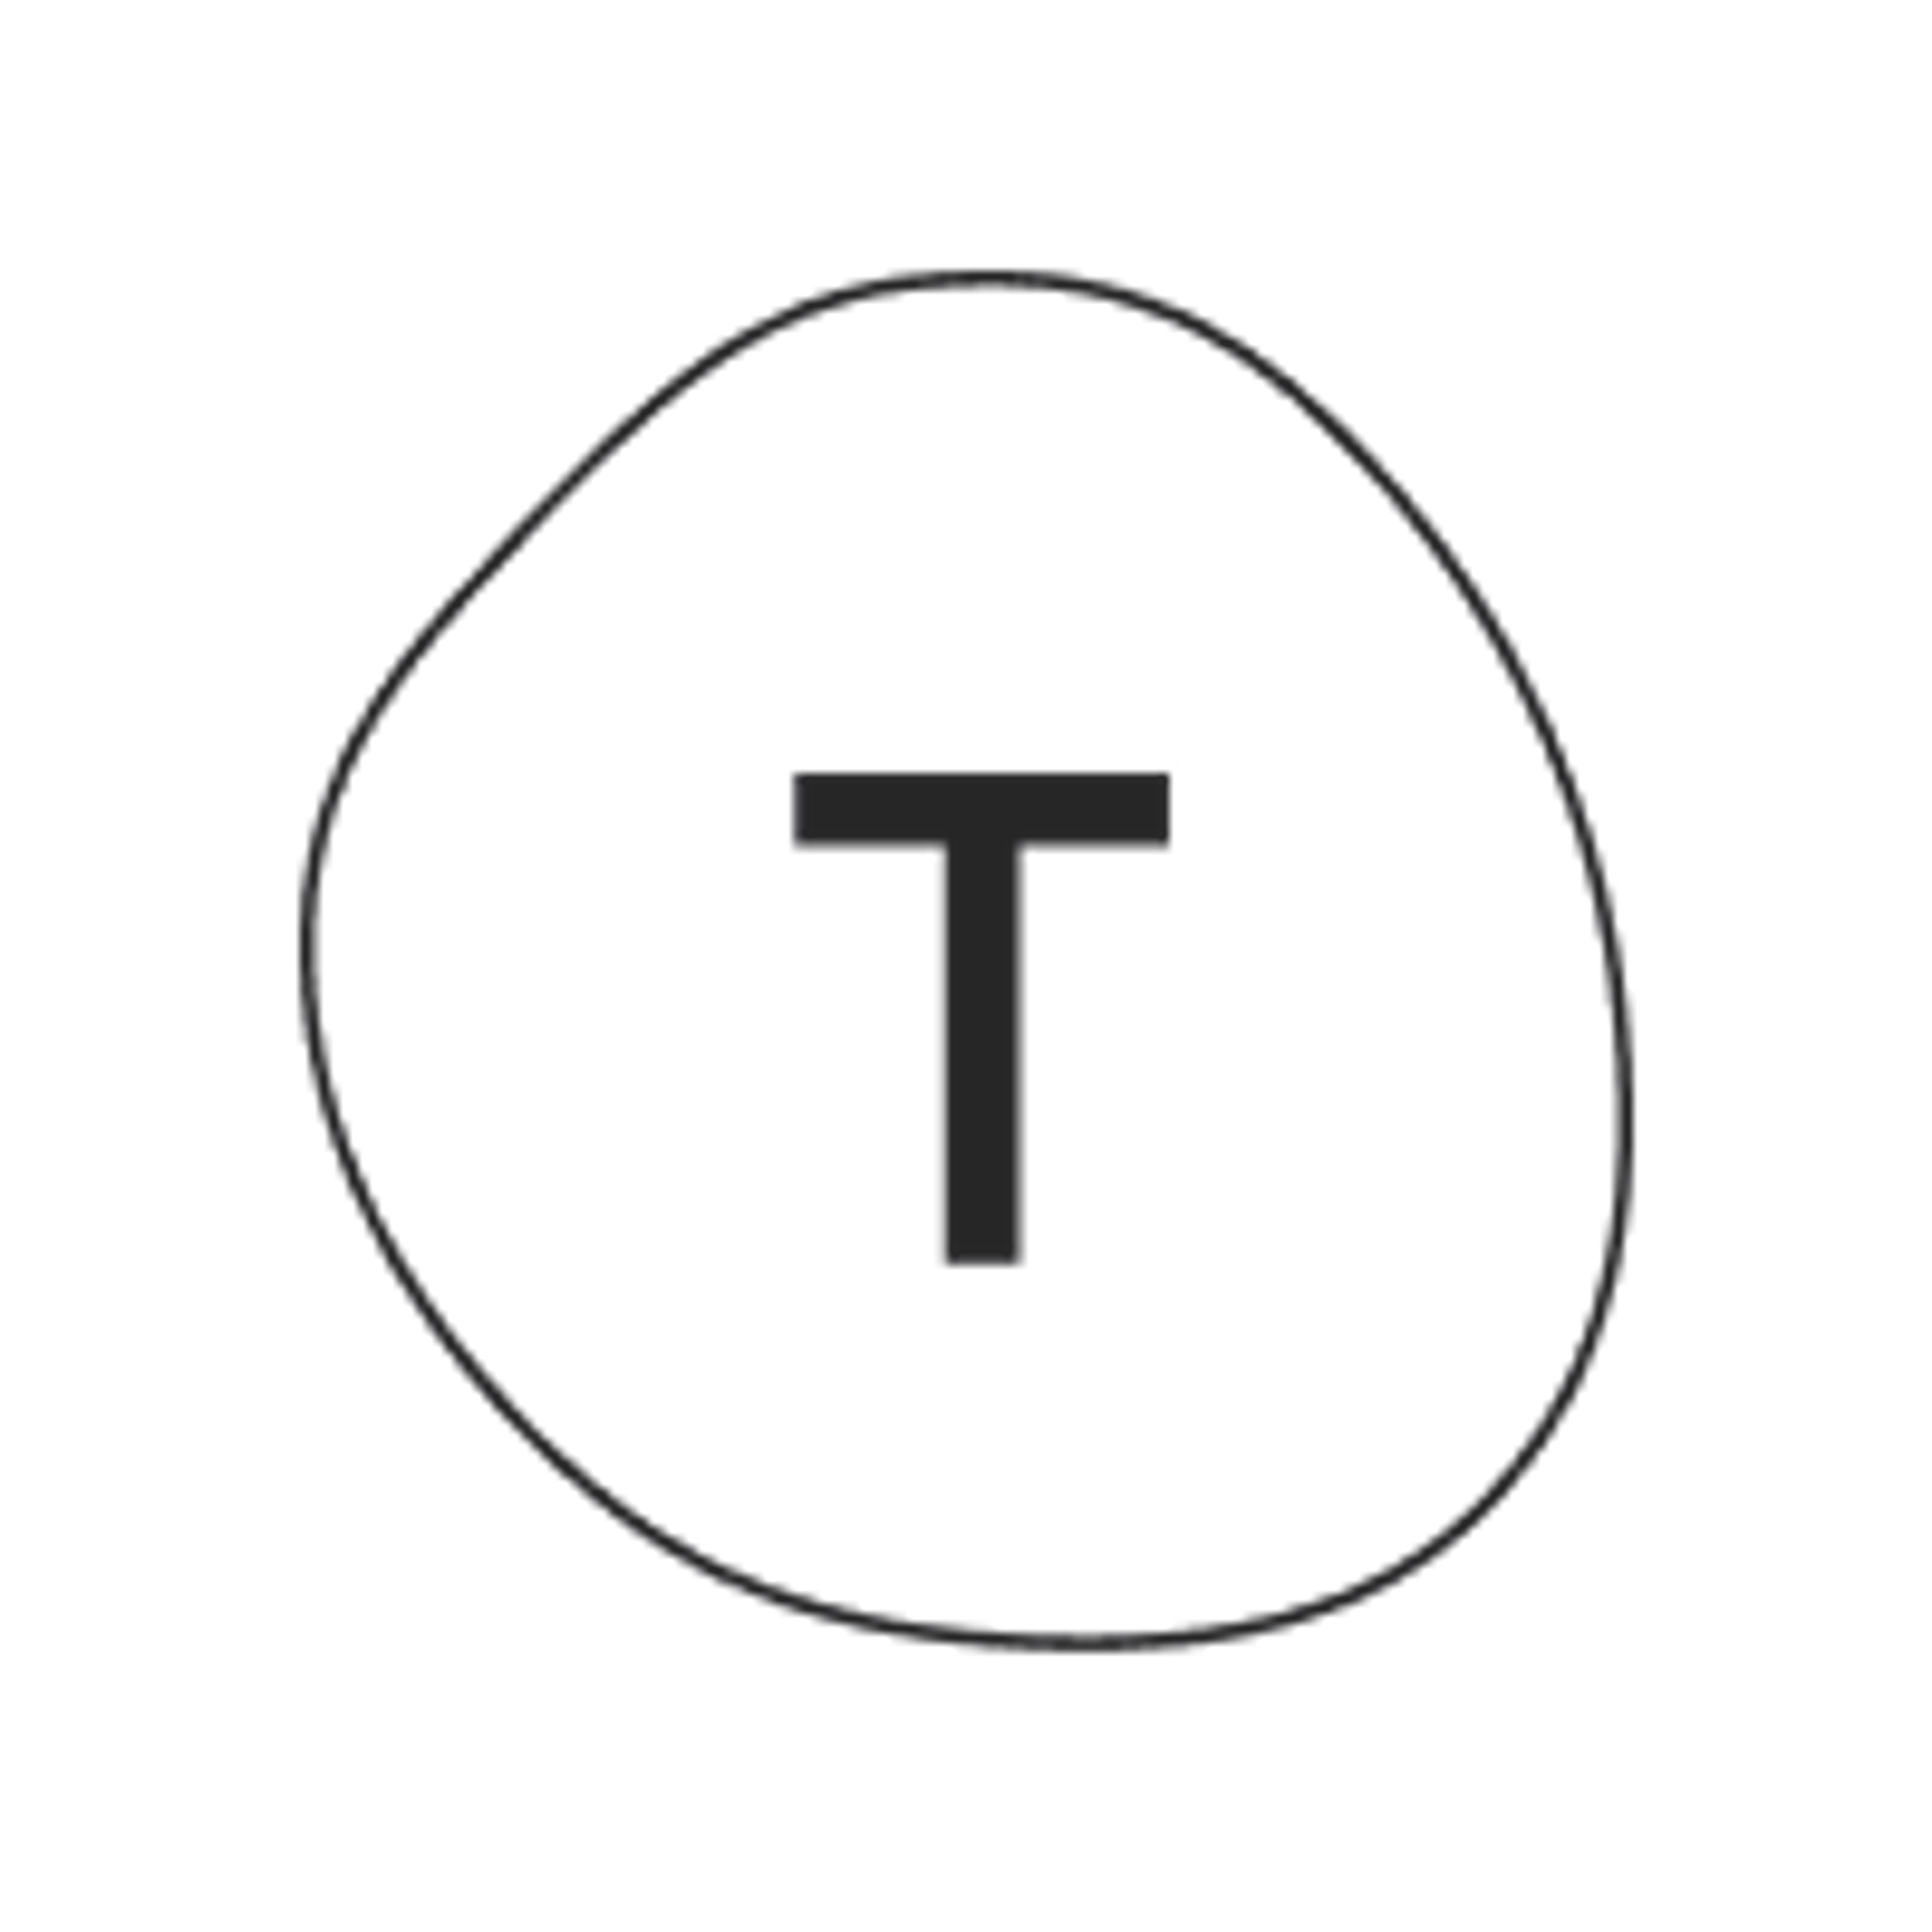 Tally, a free Typeform alternative